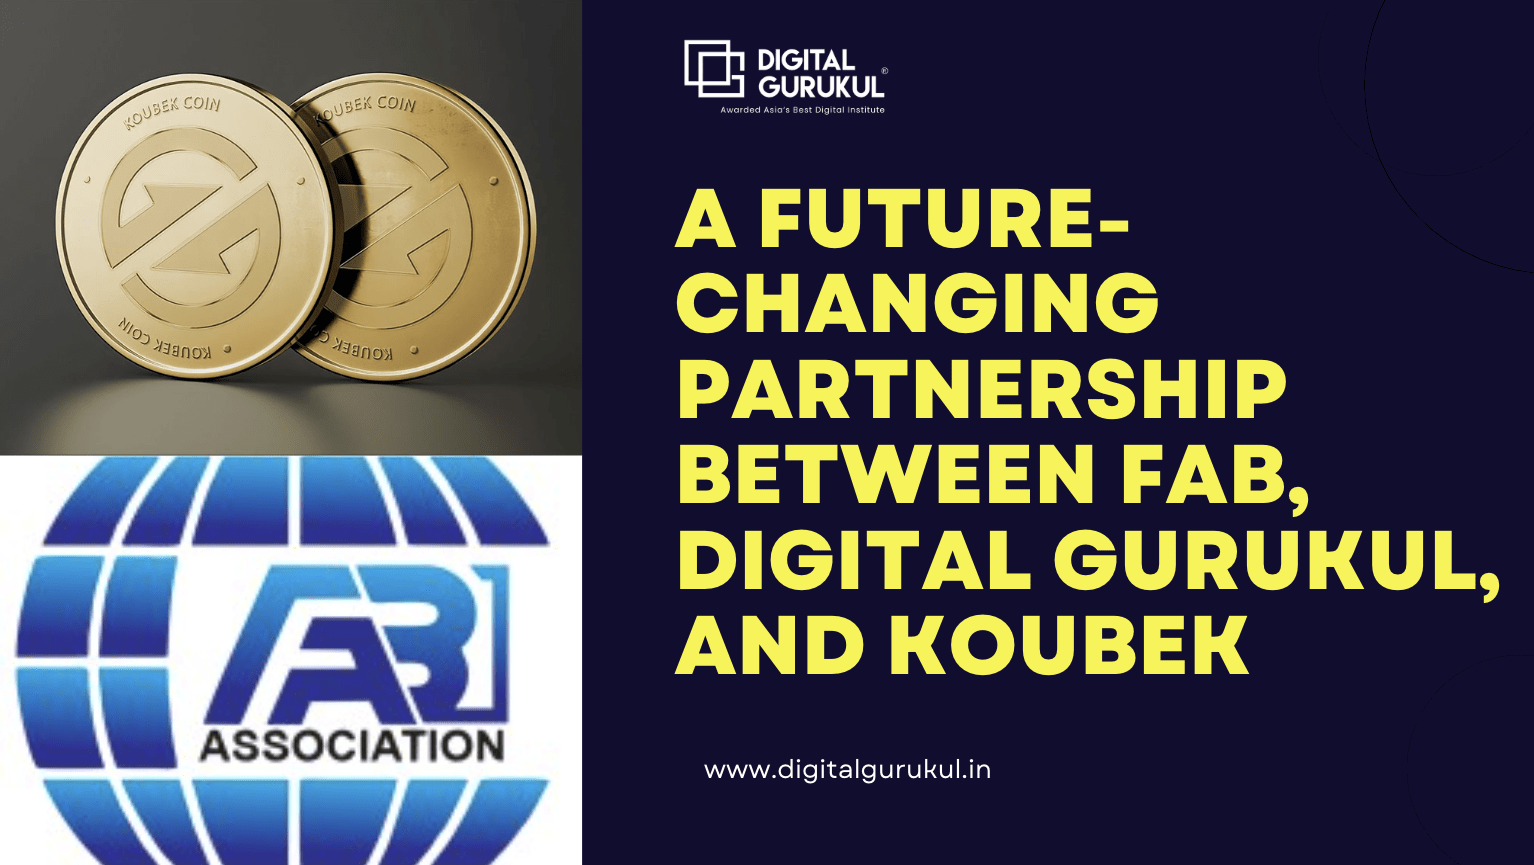 A future-changing partnership between FAB, Digital Gurukul, and Koubek